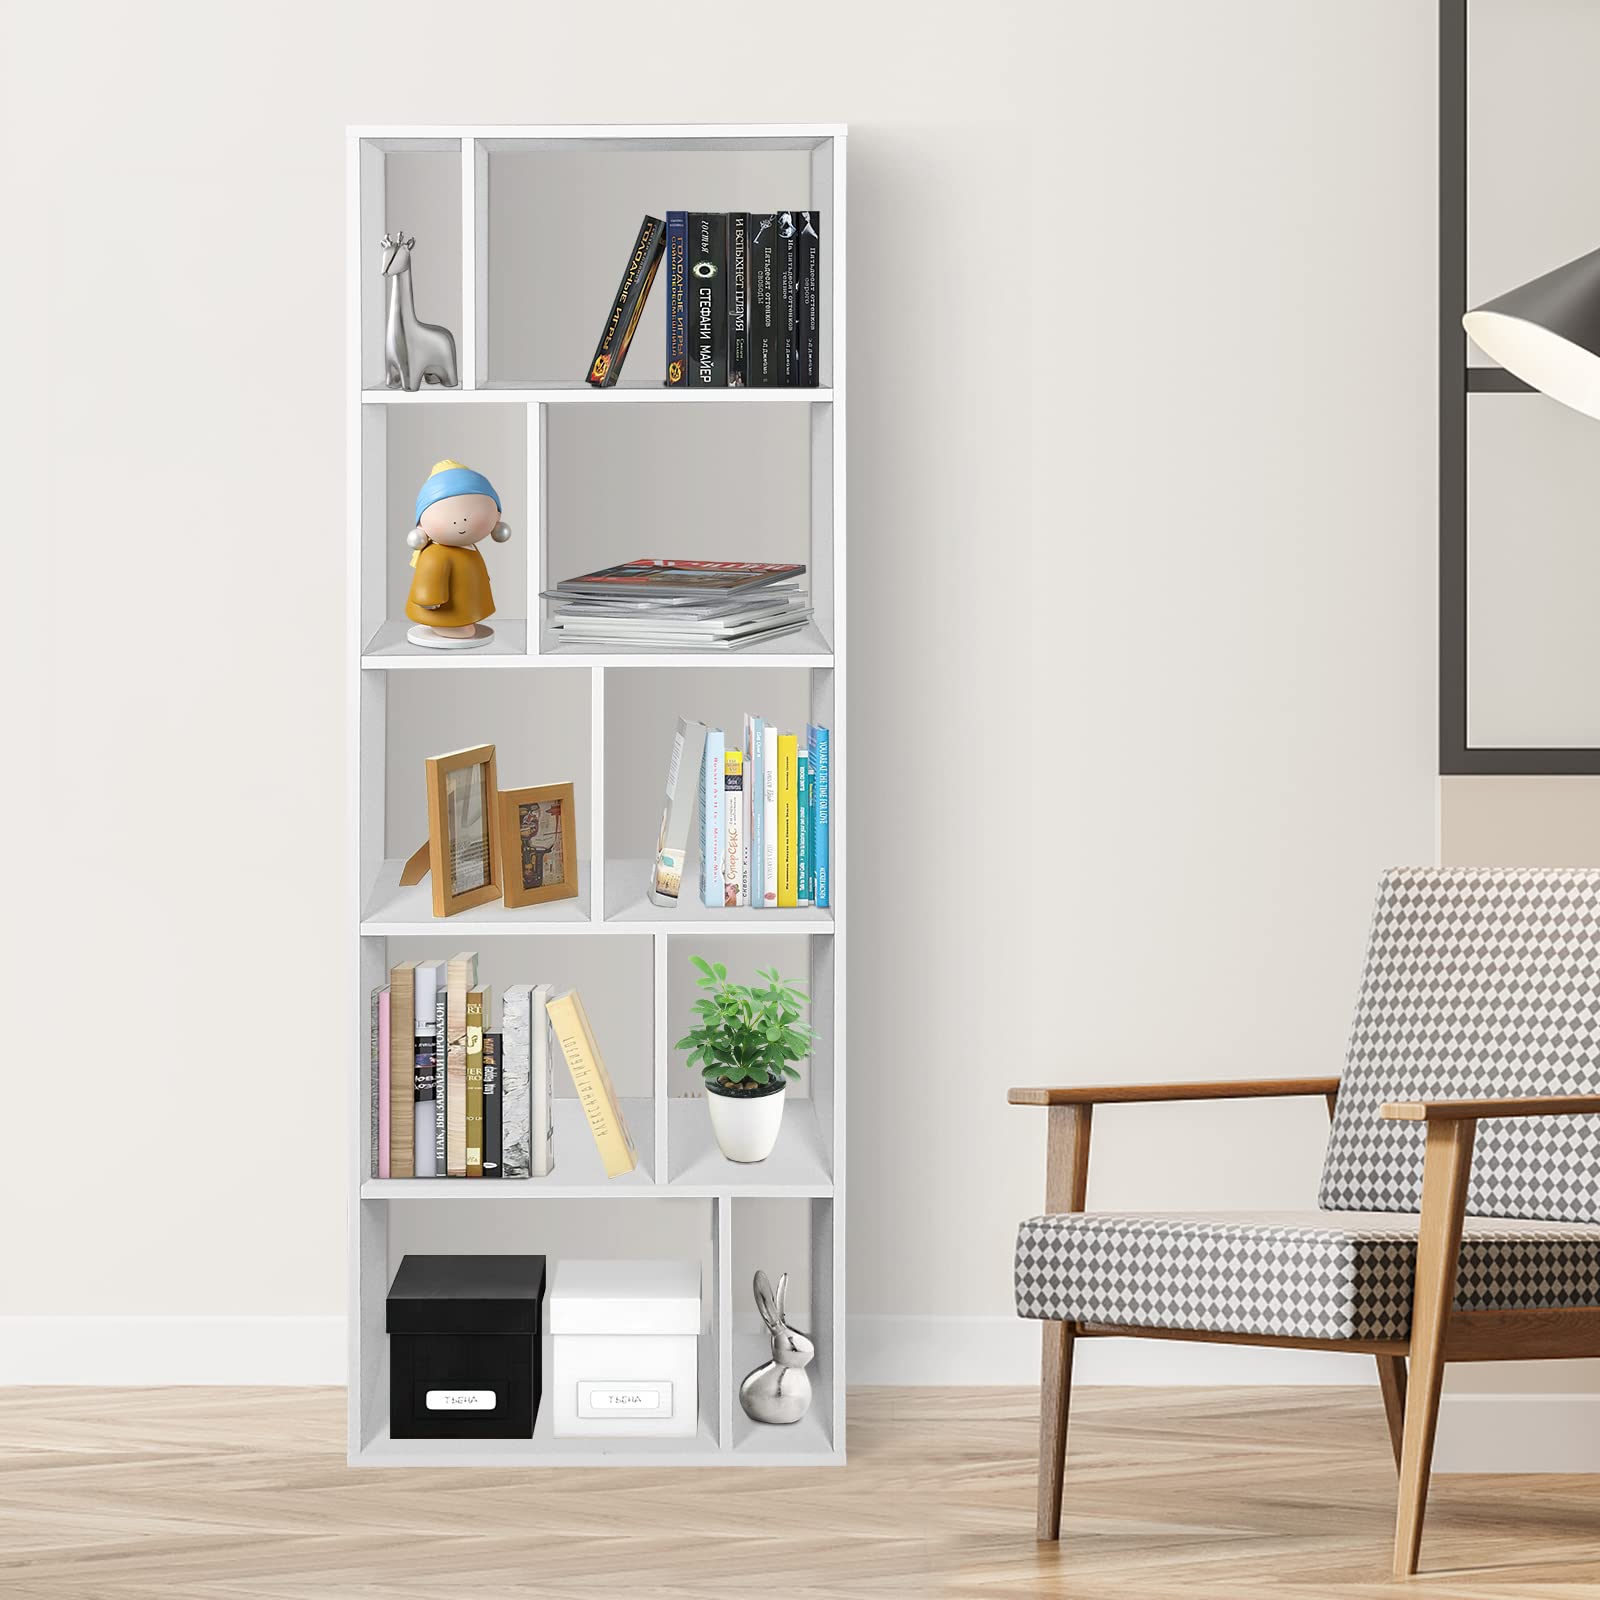 Giantex 5 Tier Bookshelf, 66" Tall 10-Cube Open Shelves Storage Organizer Cabinet